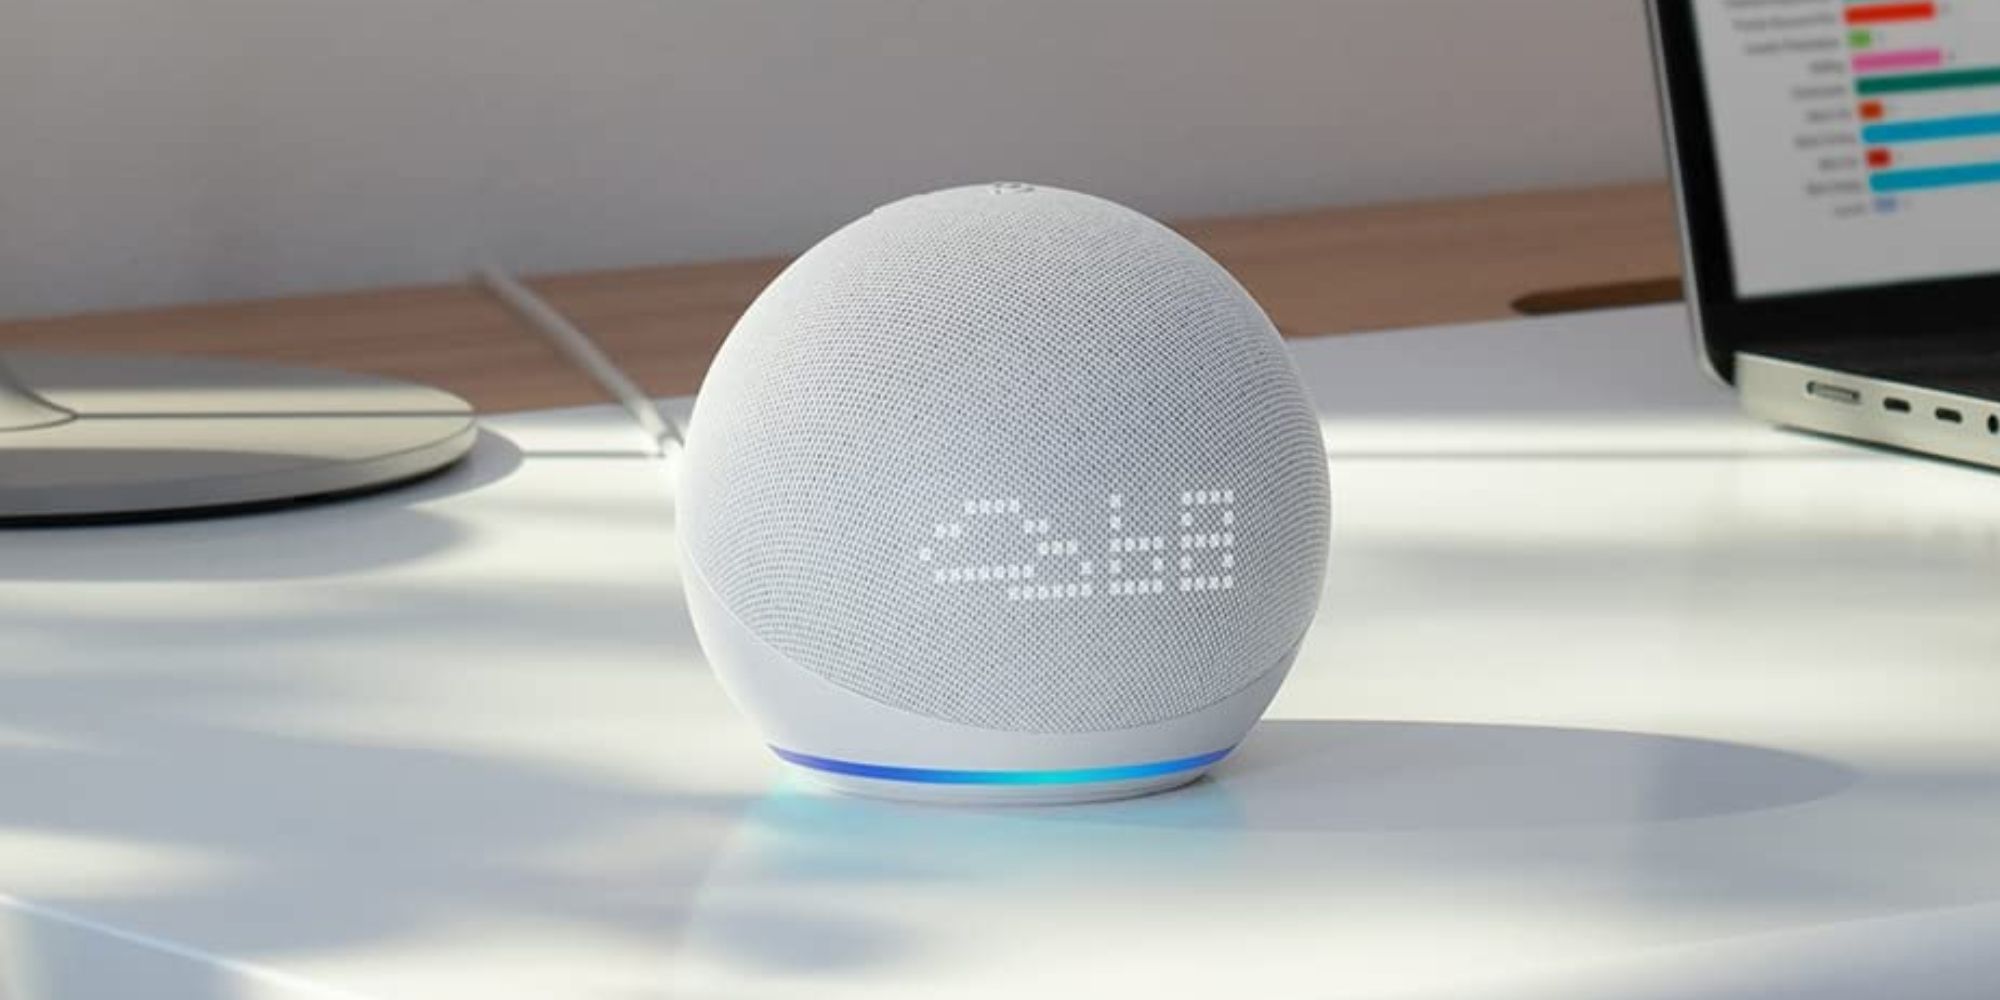 5th-gen Amazon Echo Dot smart speaker in Glacier White color